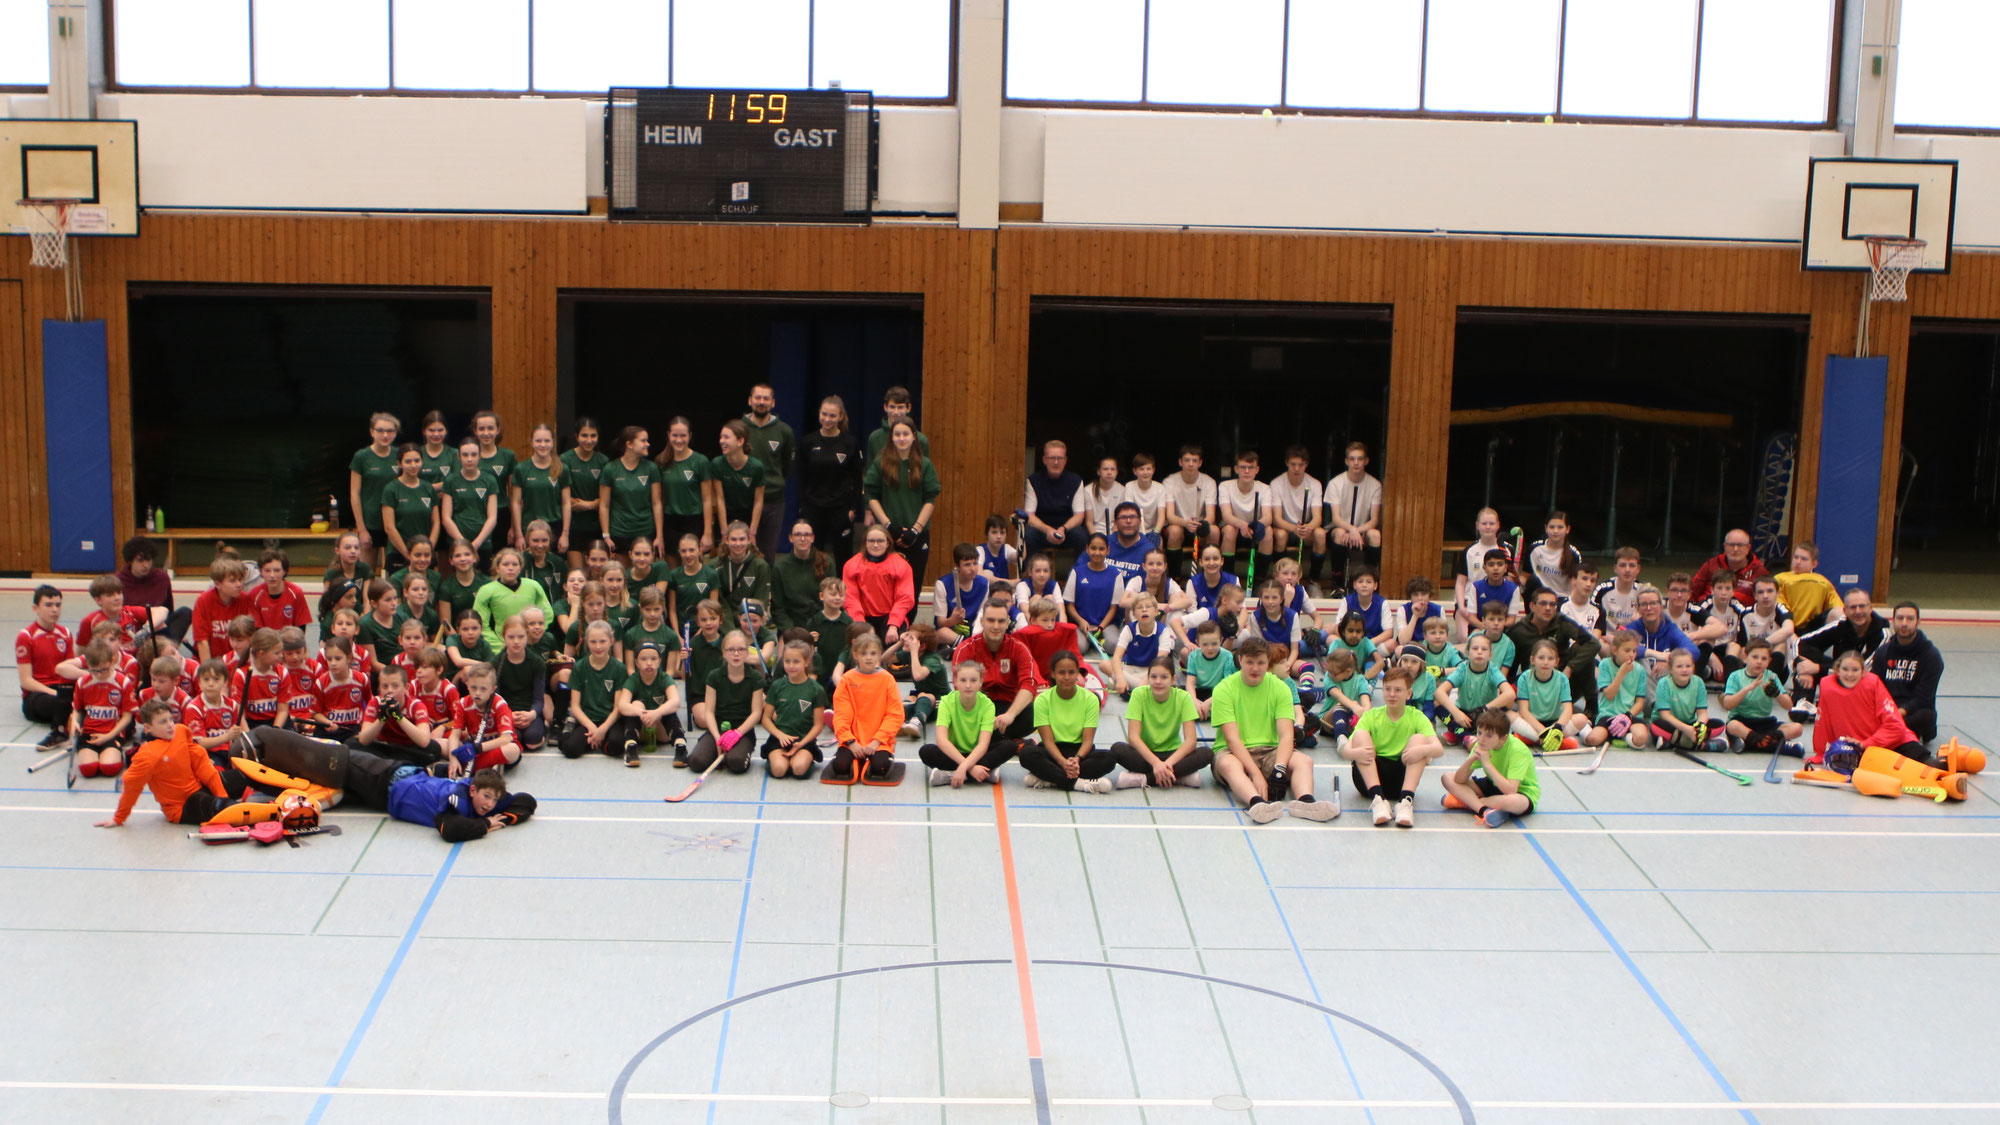 Hockeykinder-Turnier mit 14 Teams in Helmstedt